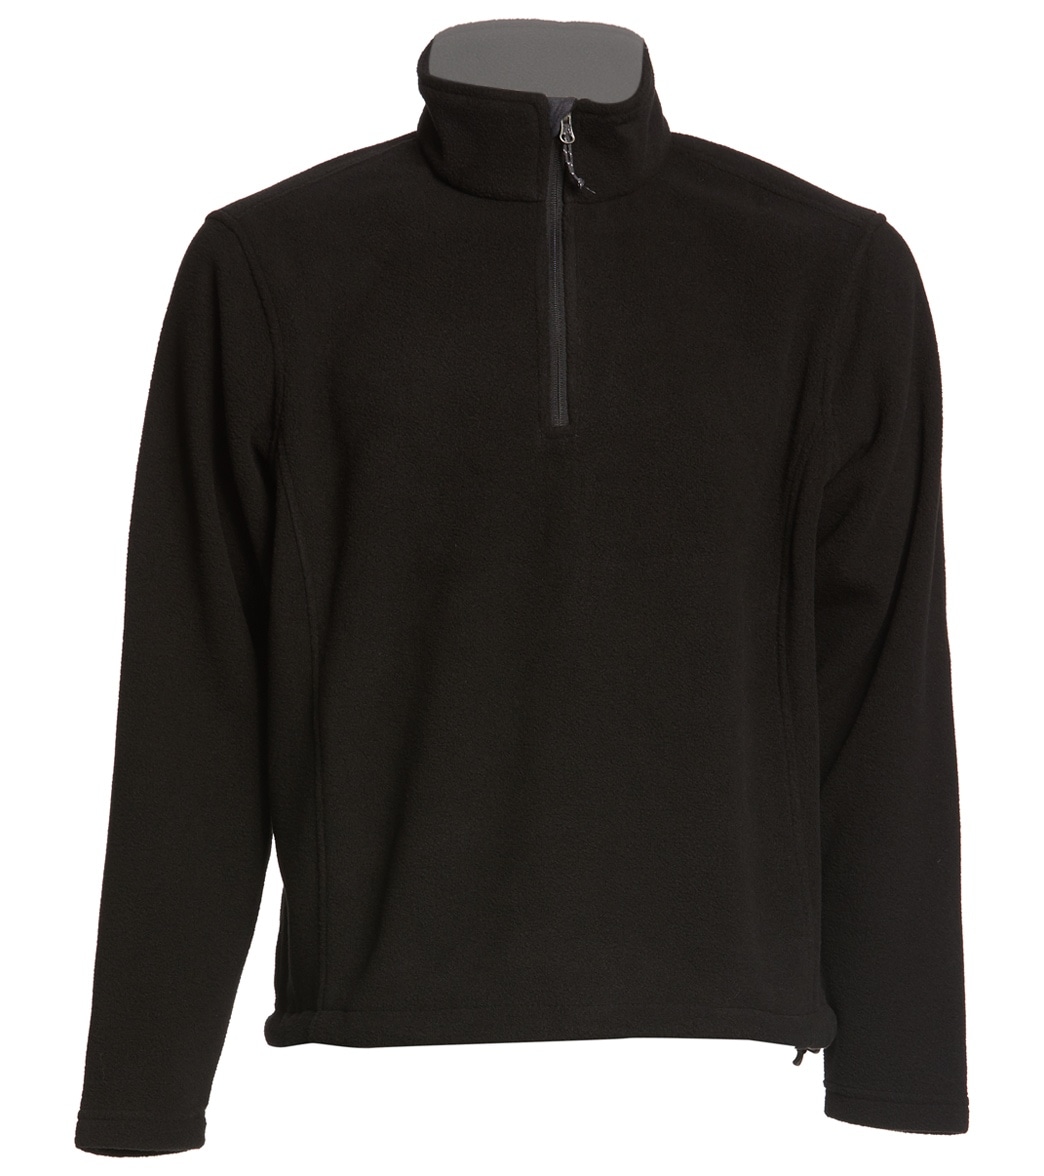 Men's Fleece 1/4-Zip Pullover - Black Small Polyester - Swimoutlet.com